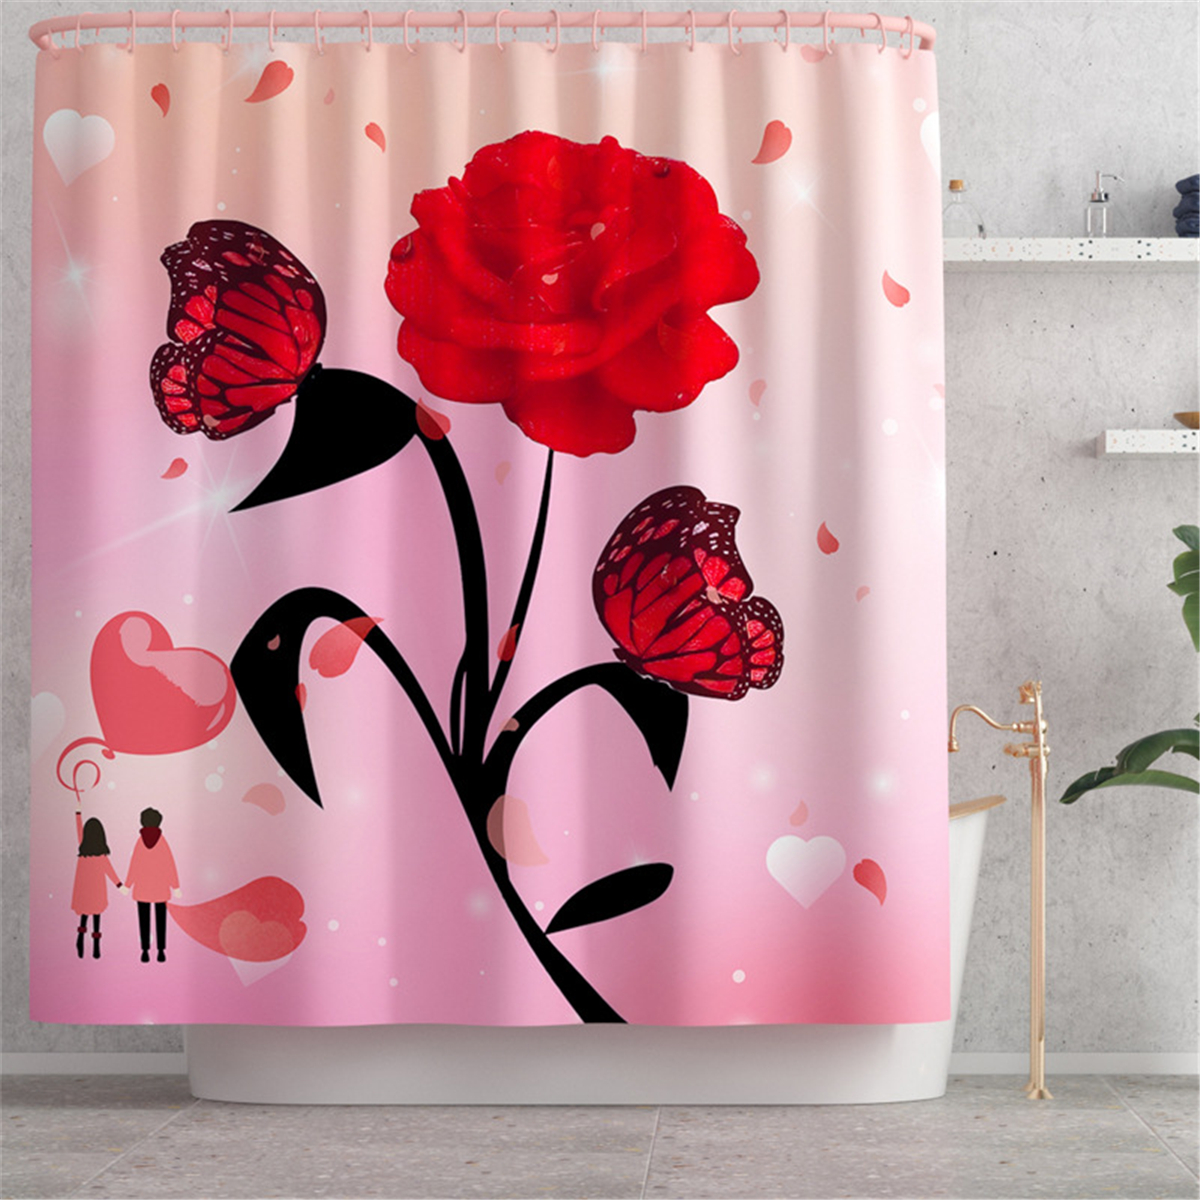 Rose-Flower-Waterproof-Shower-Curtain-Non-Slip-Rug-Toilet-Cover-Bath-Mat-Decor-1821912-7